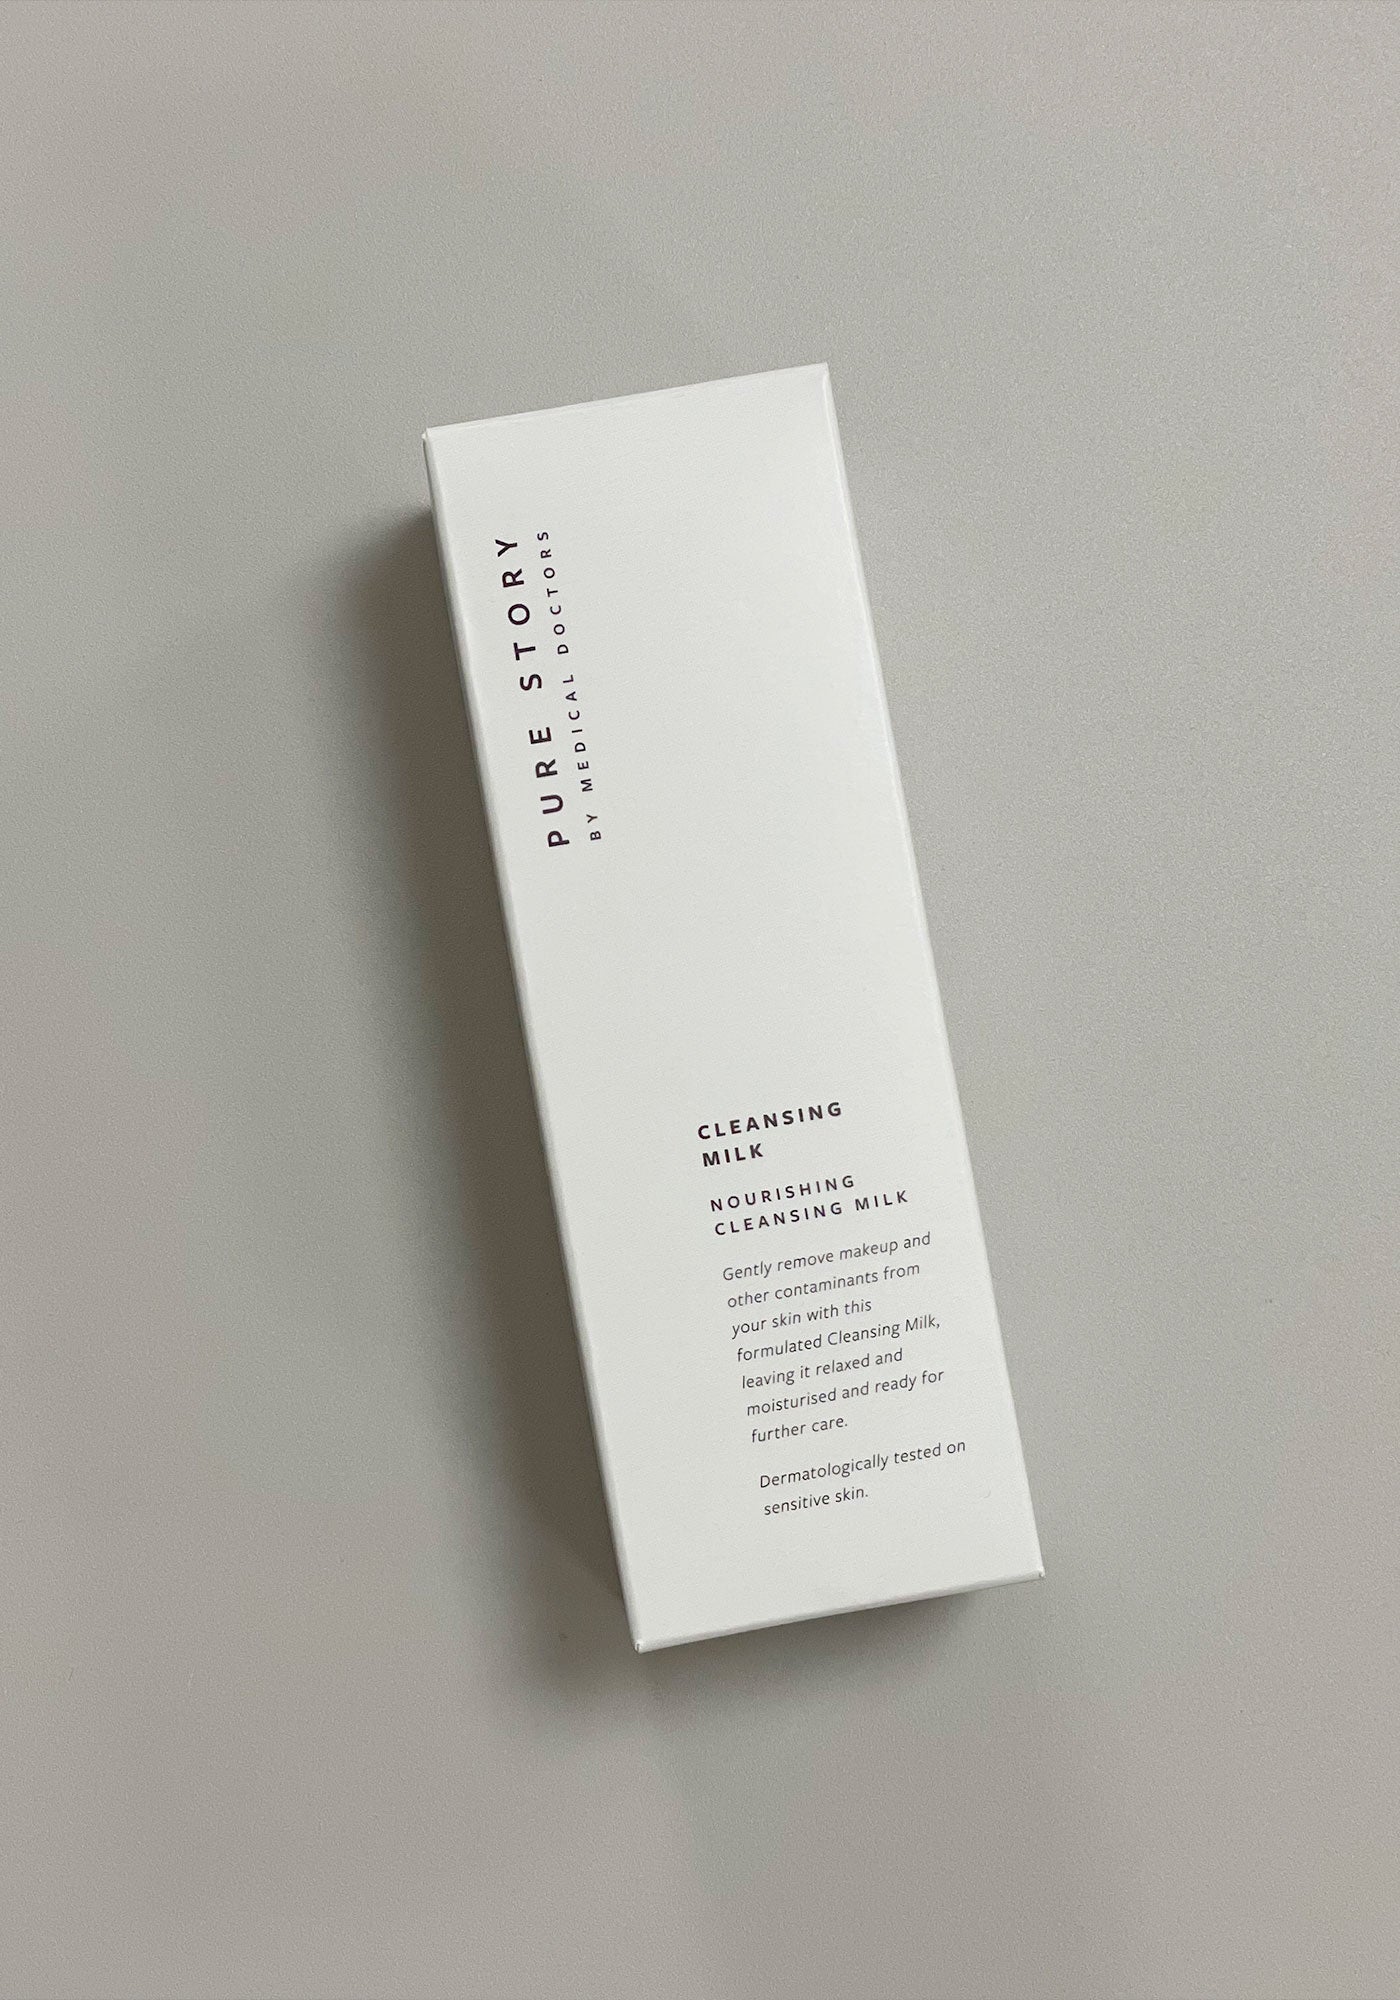 karolina krol studio pure story eco friendly pharmaceutical cosmetics minimalist brand identity packaging design